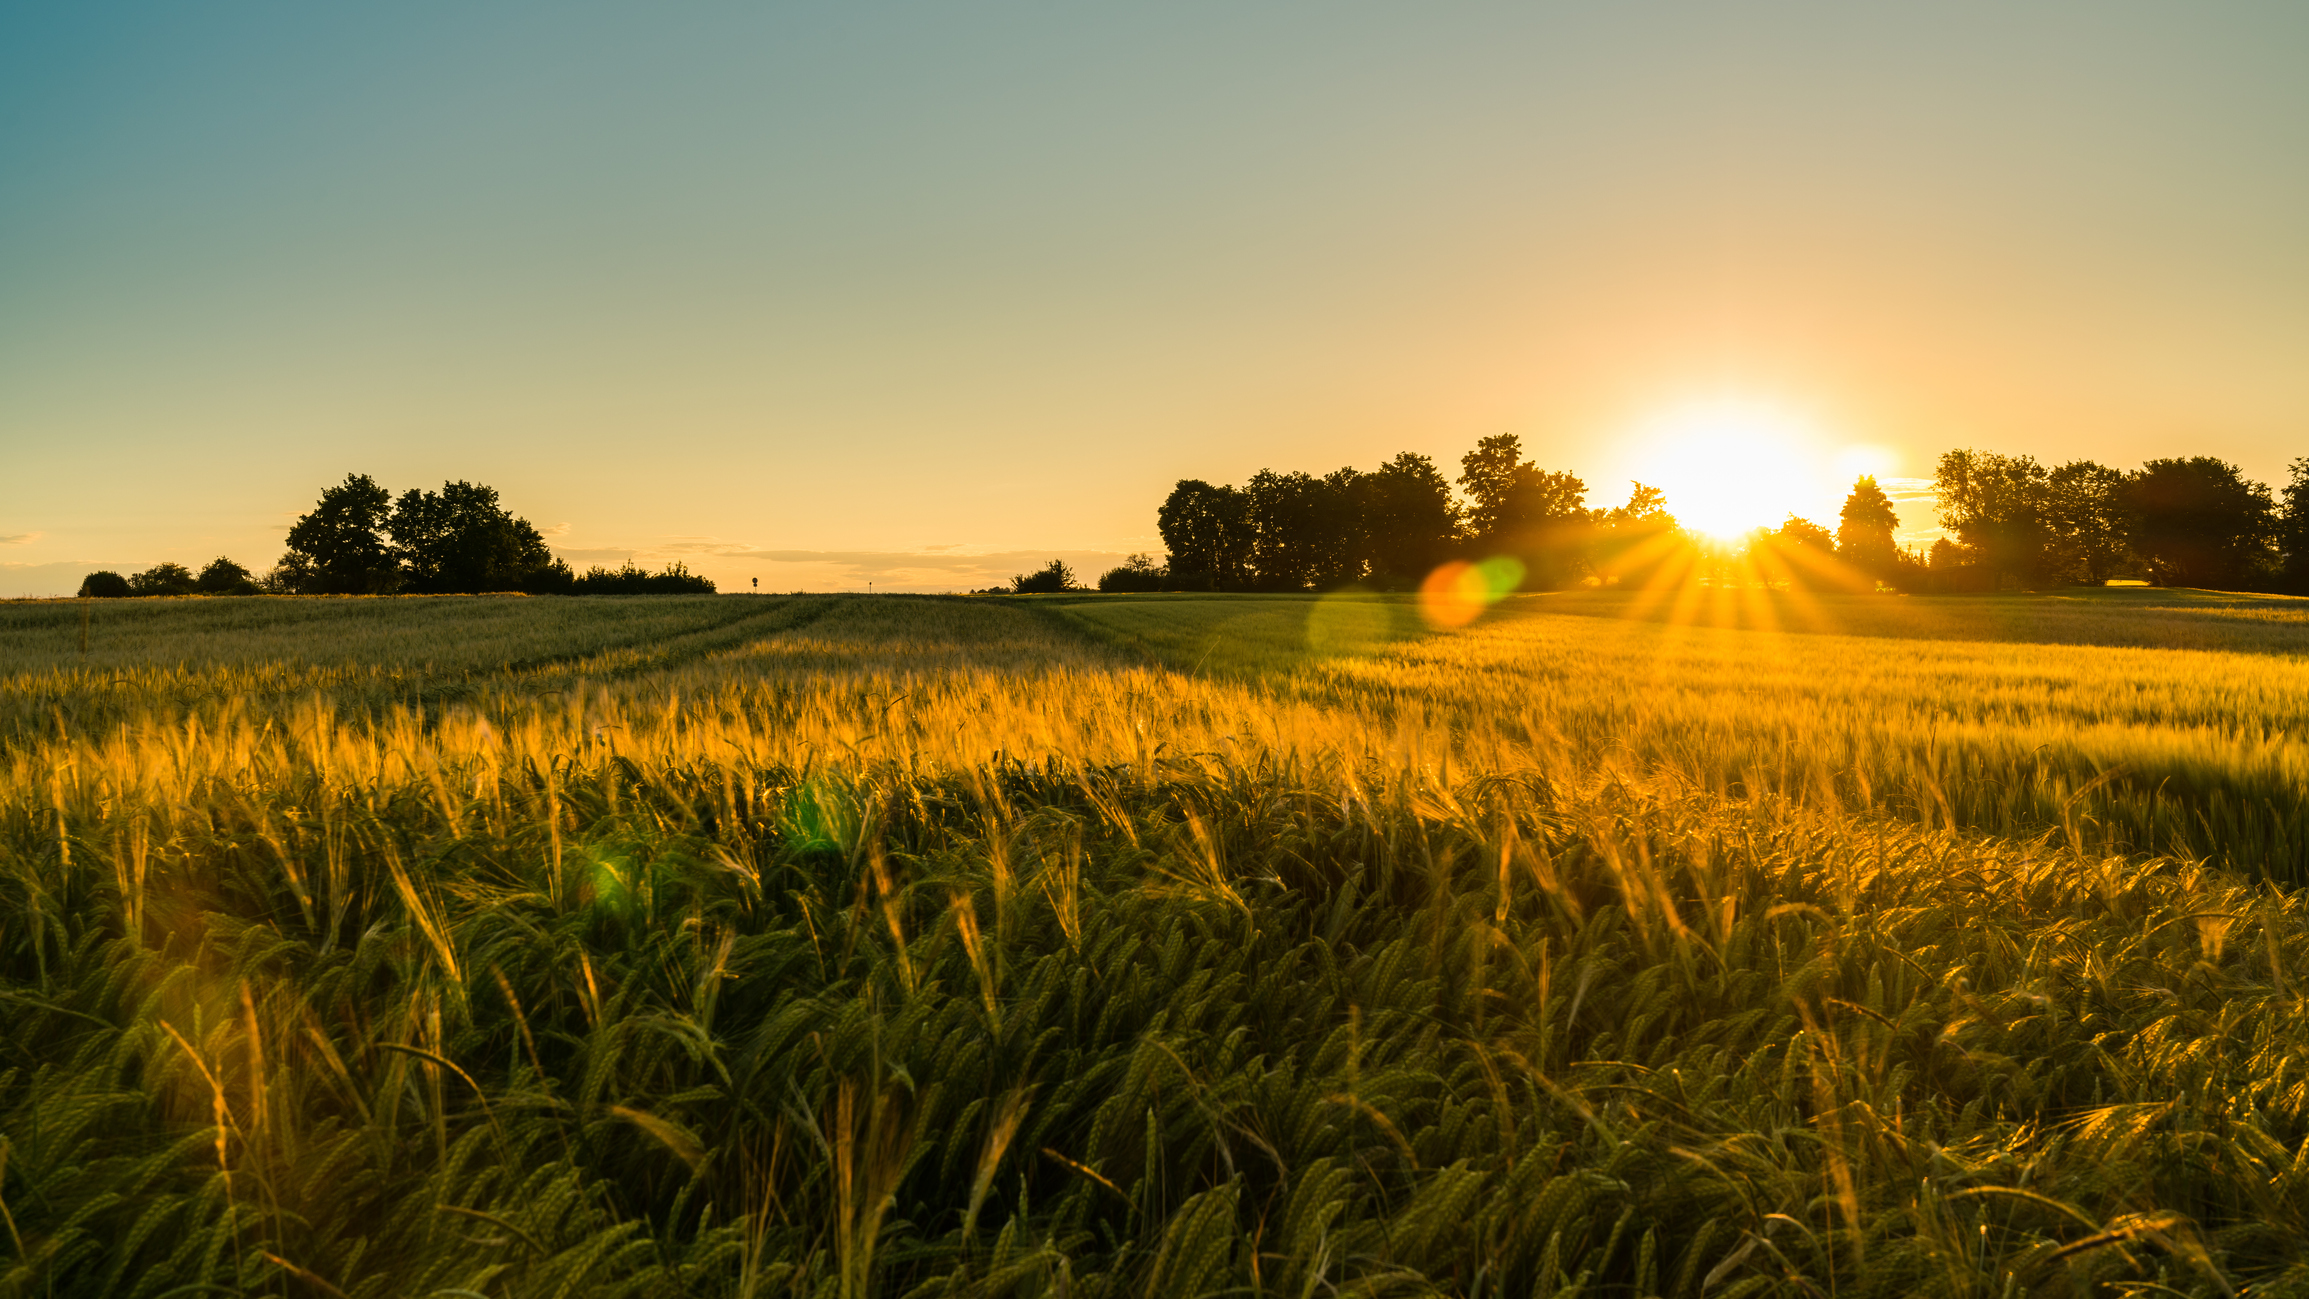 Sunset or sunrise on a wheat farmers field